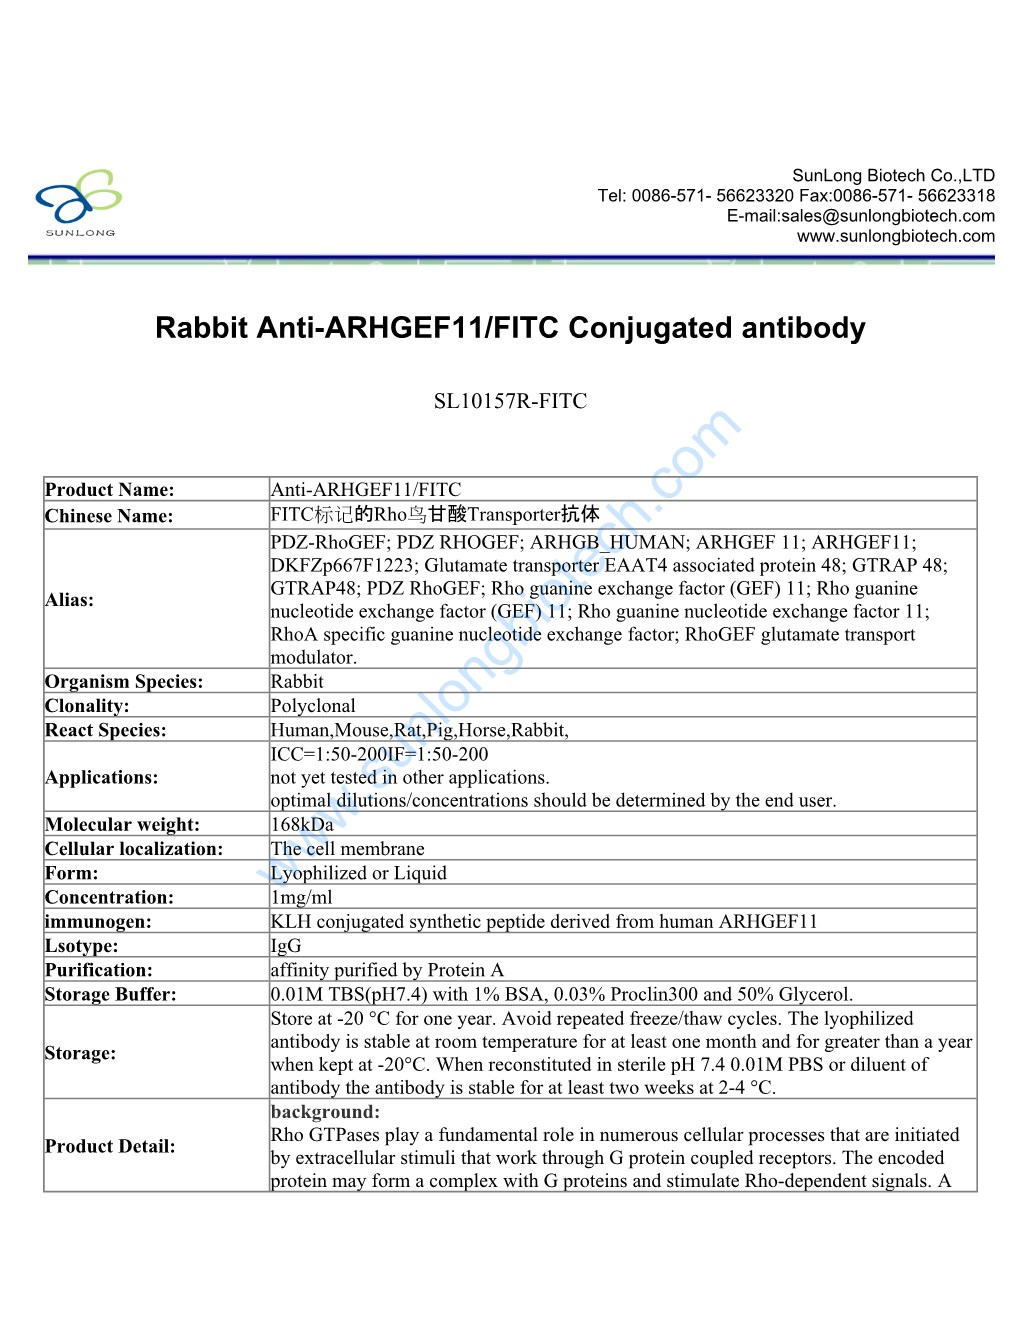 Rabbit Anti-ARHGEF11/FITC Conjugated Antibody-SL10157R